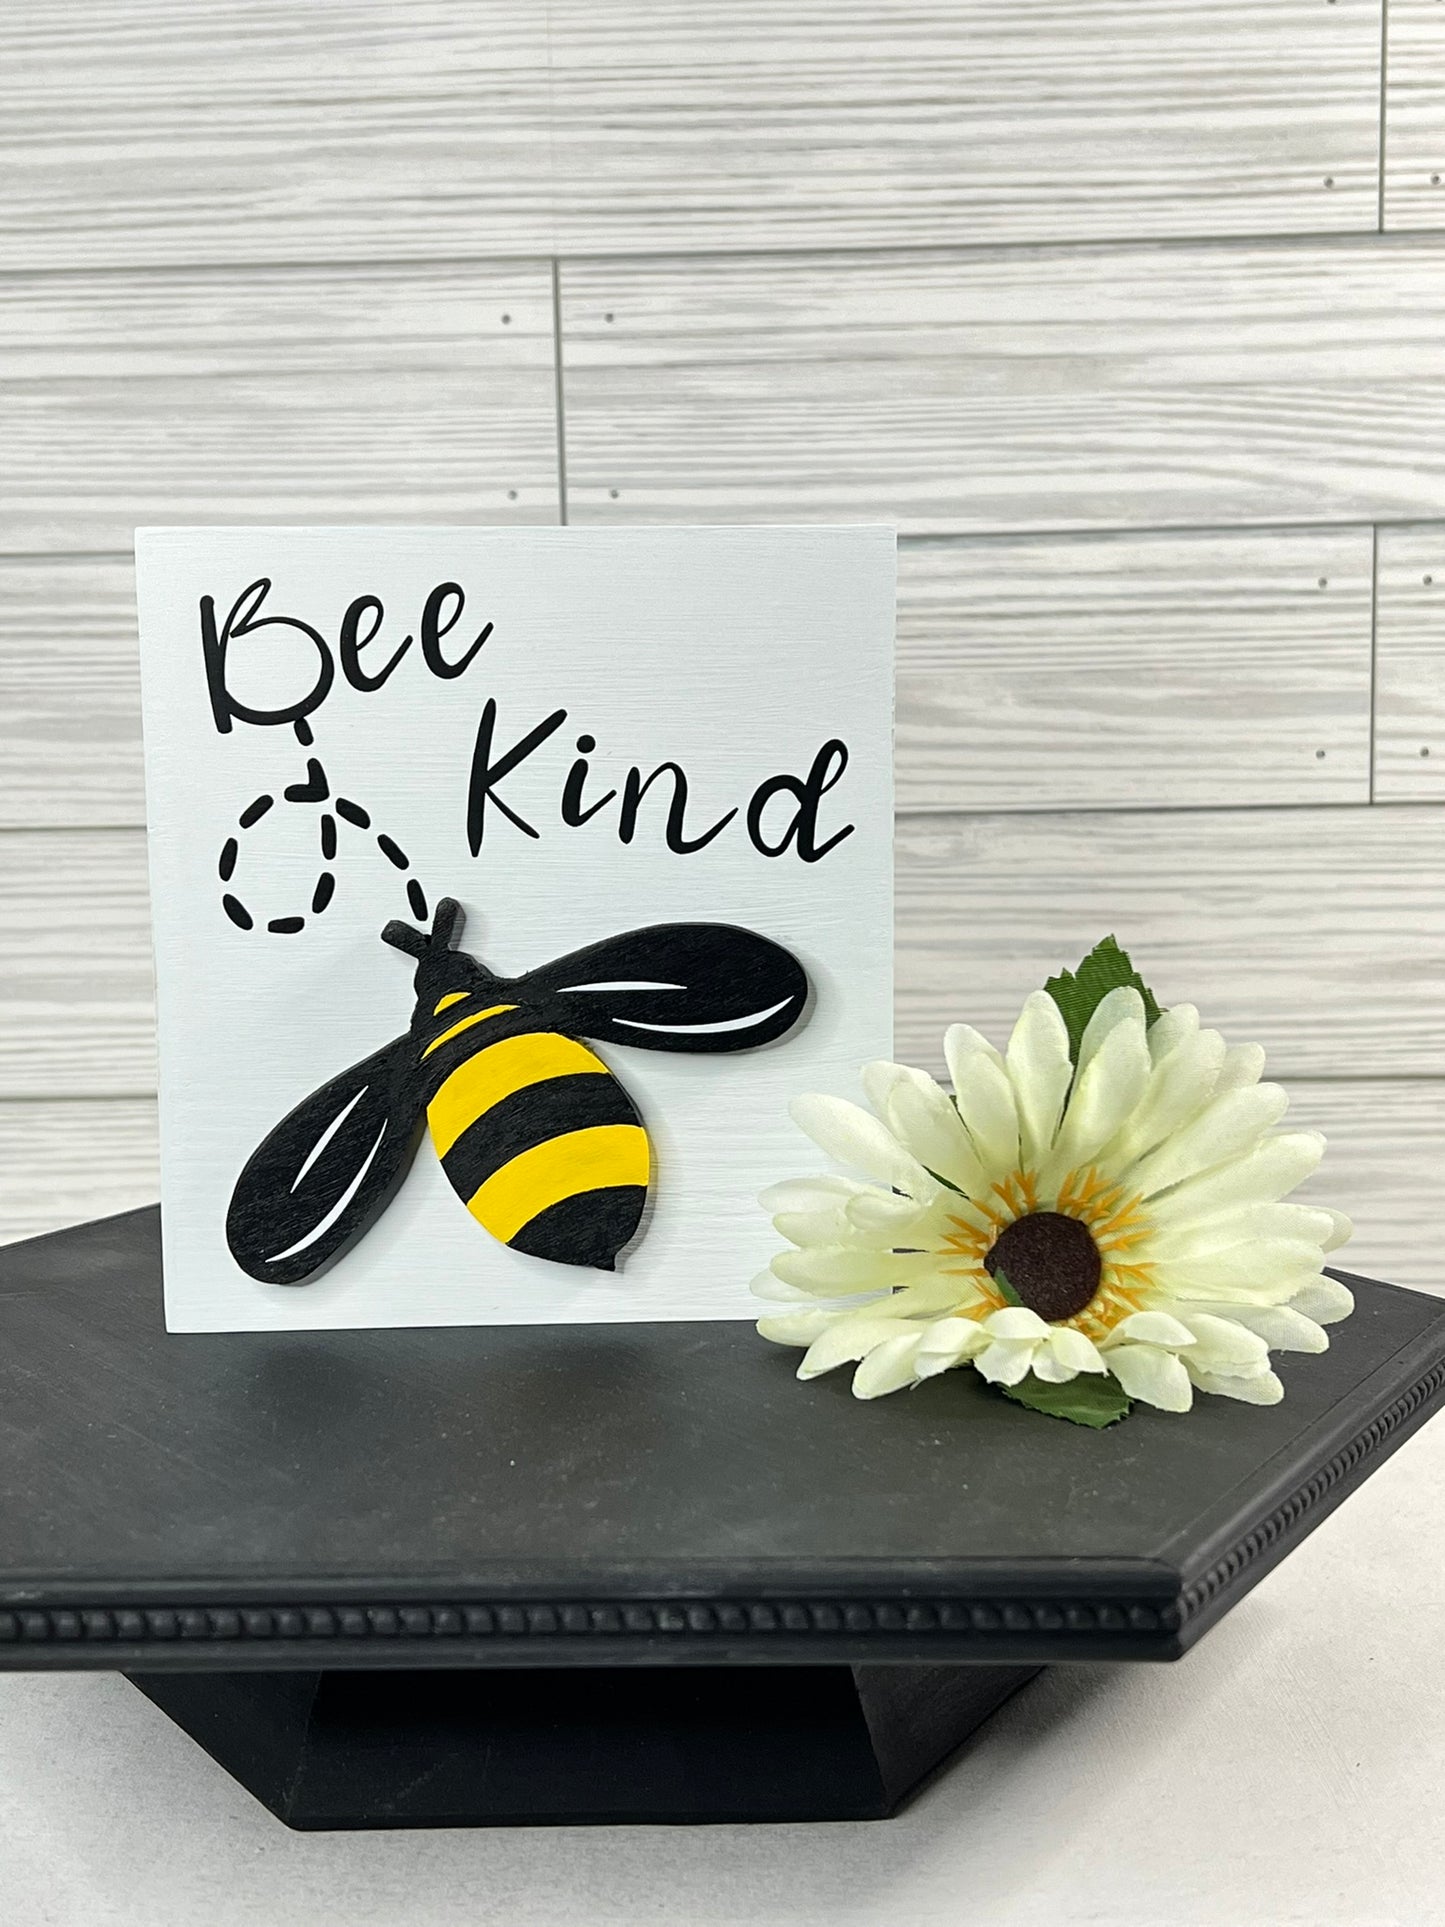 Bee Kind Sign